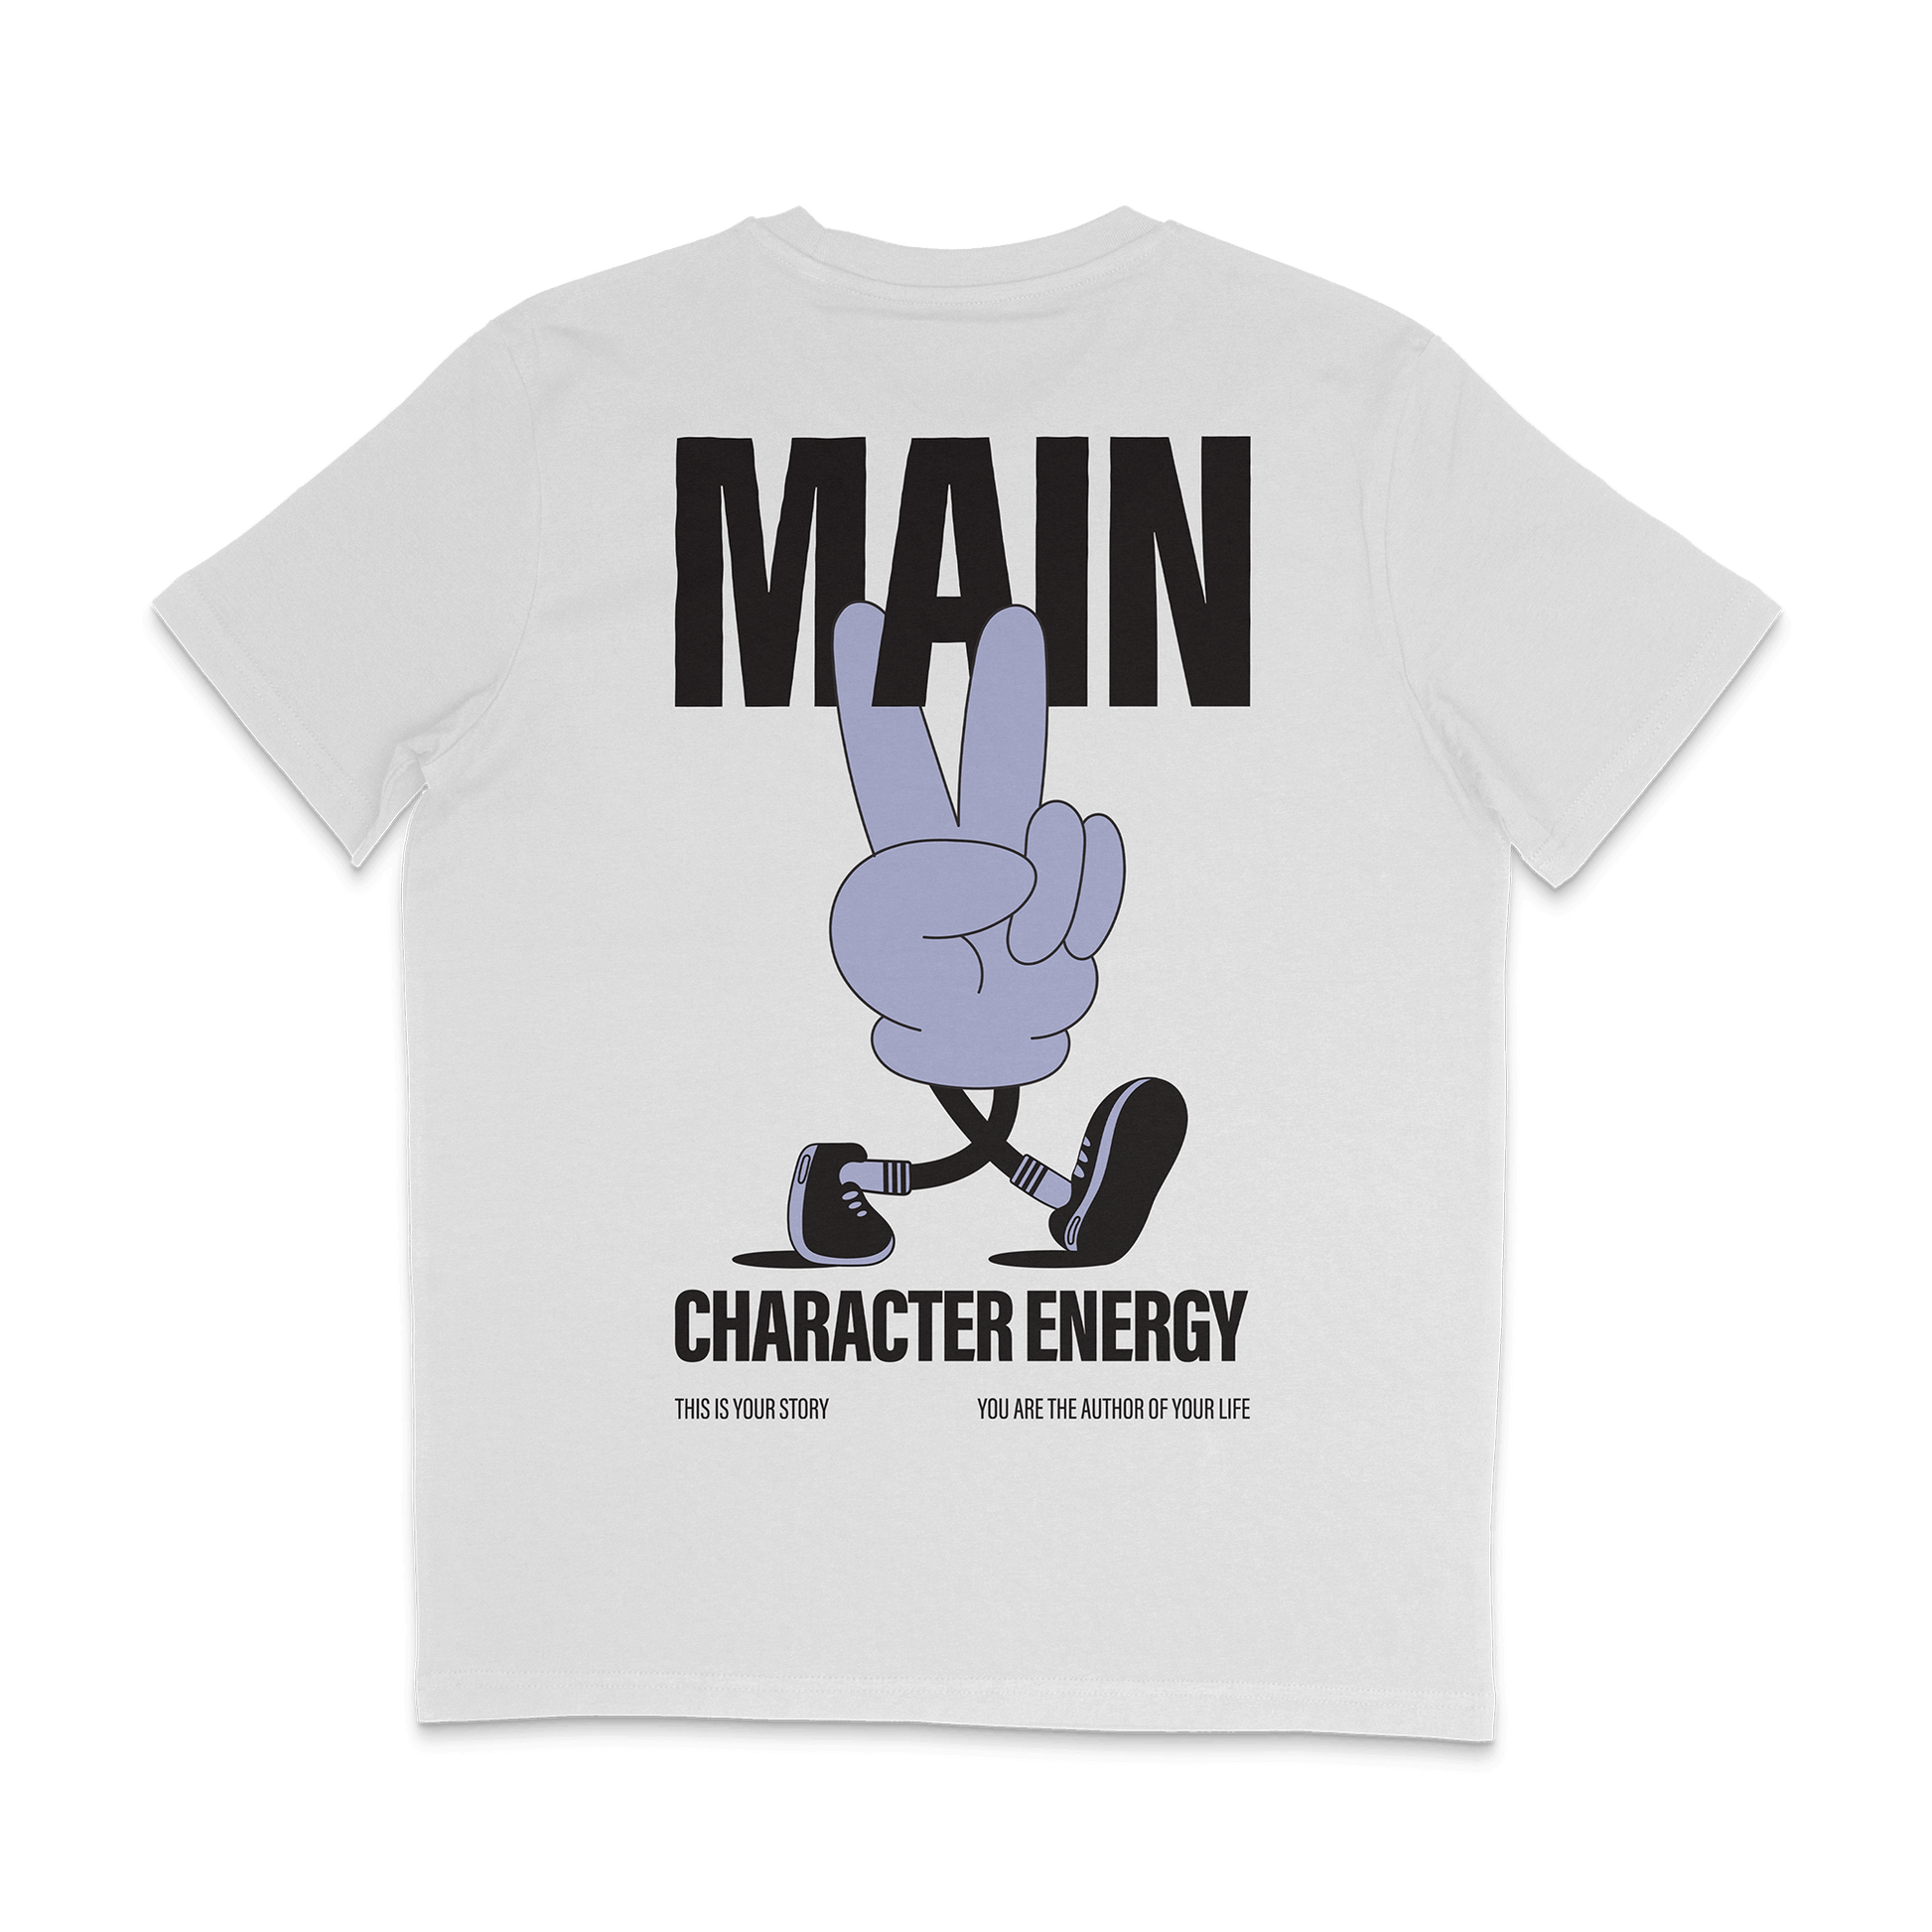 Main character energy t-shirt in purple